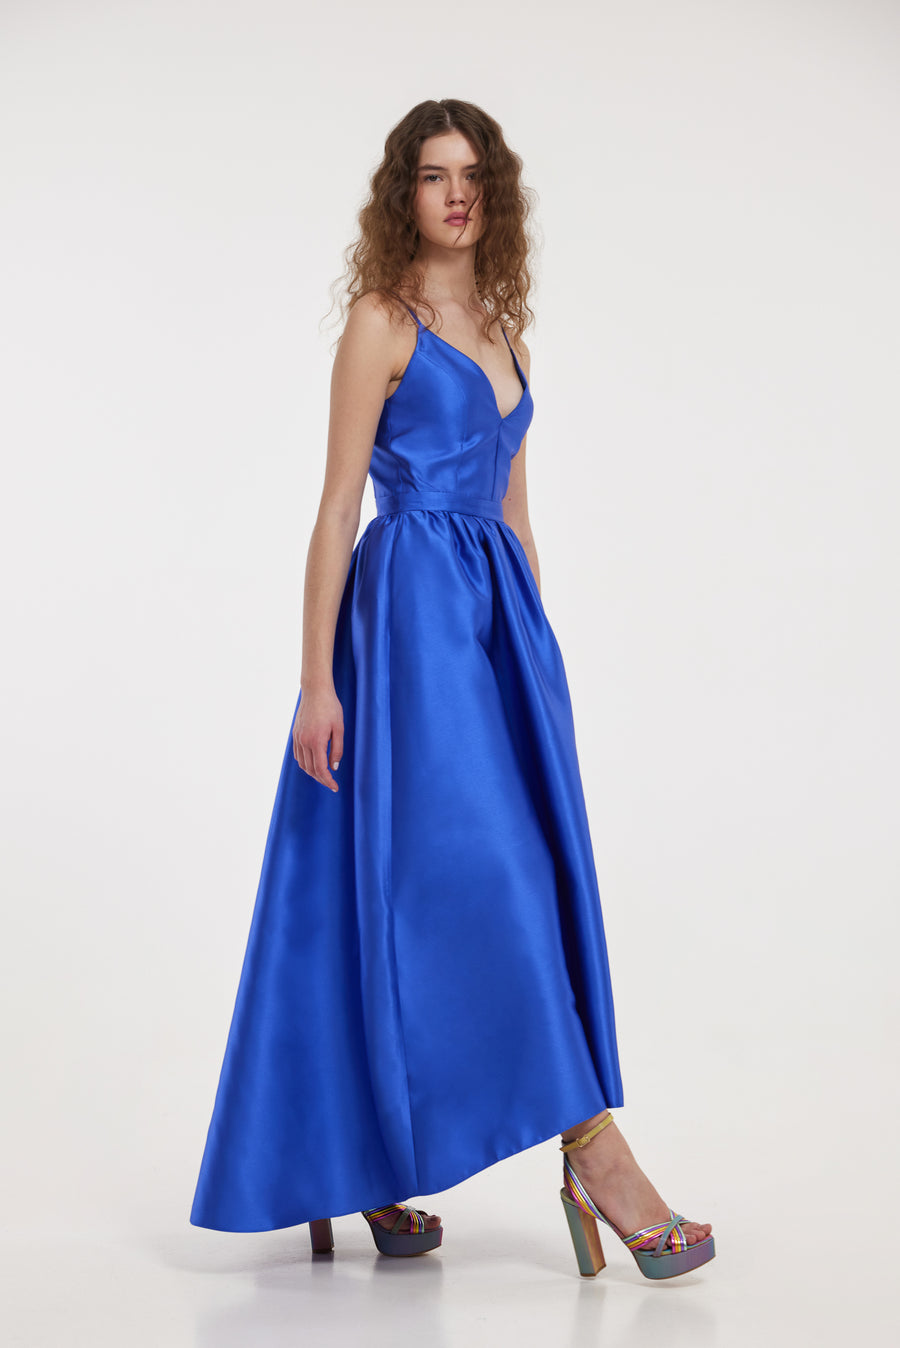 Asteria Dress (Royal Blue)